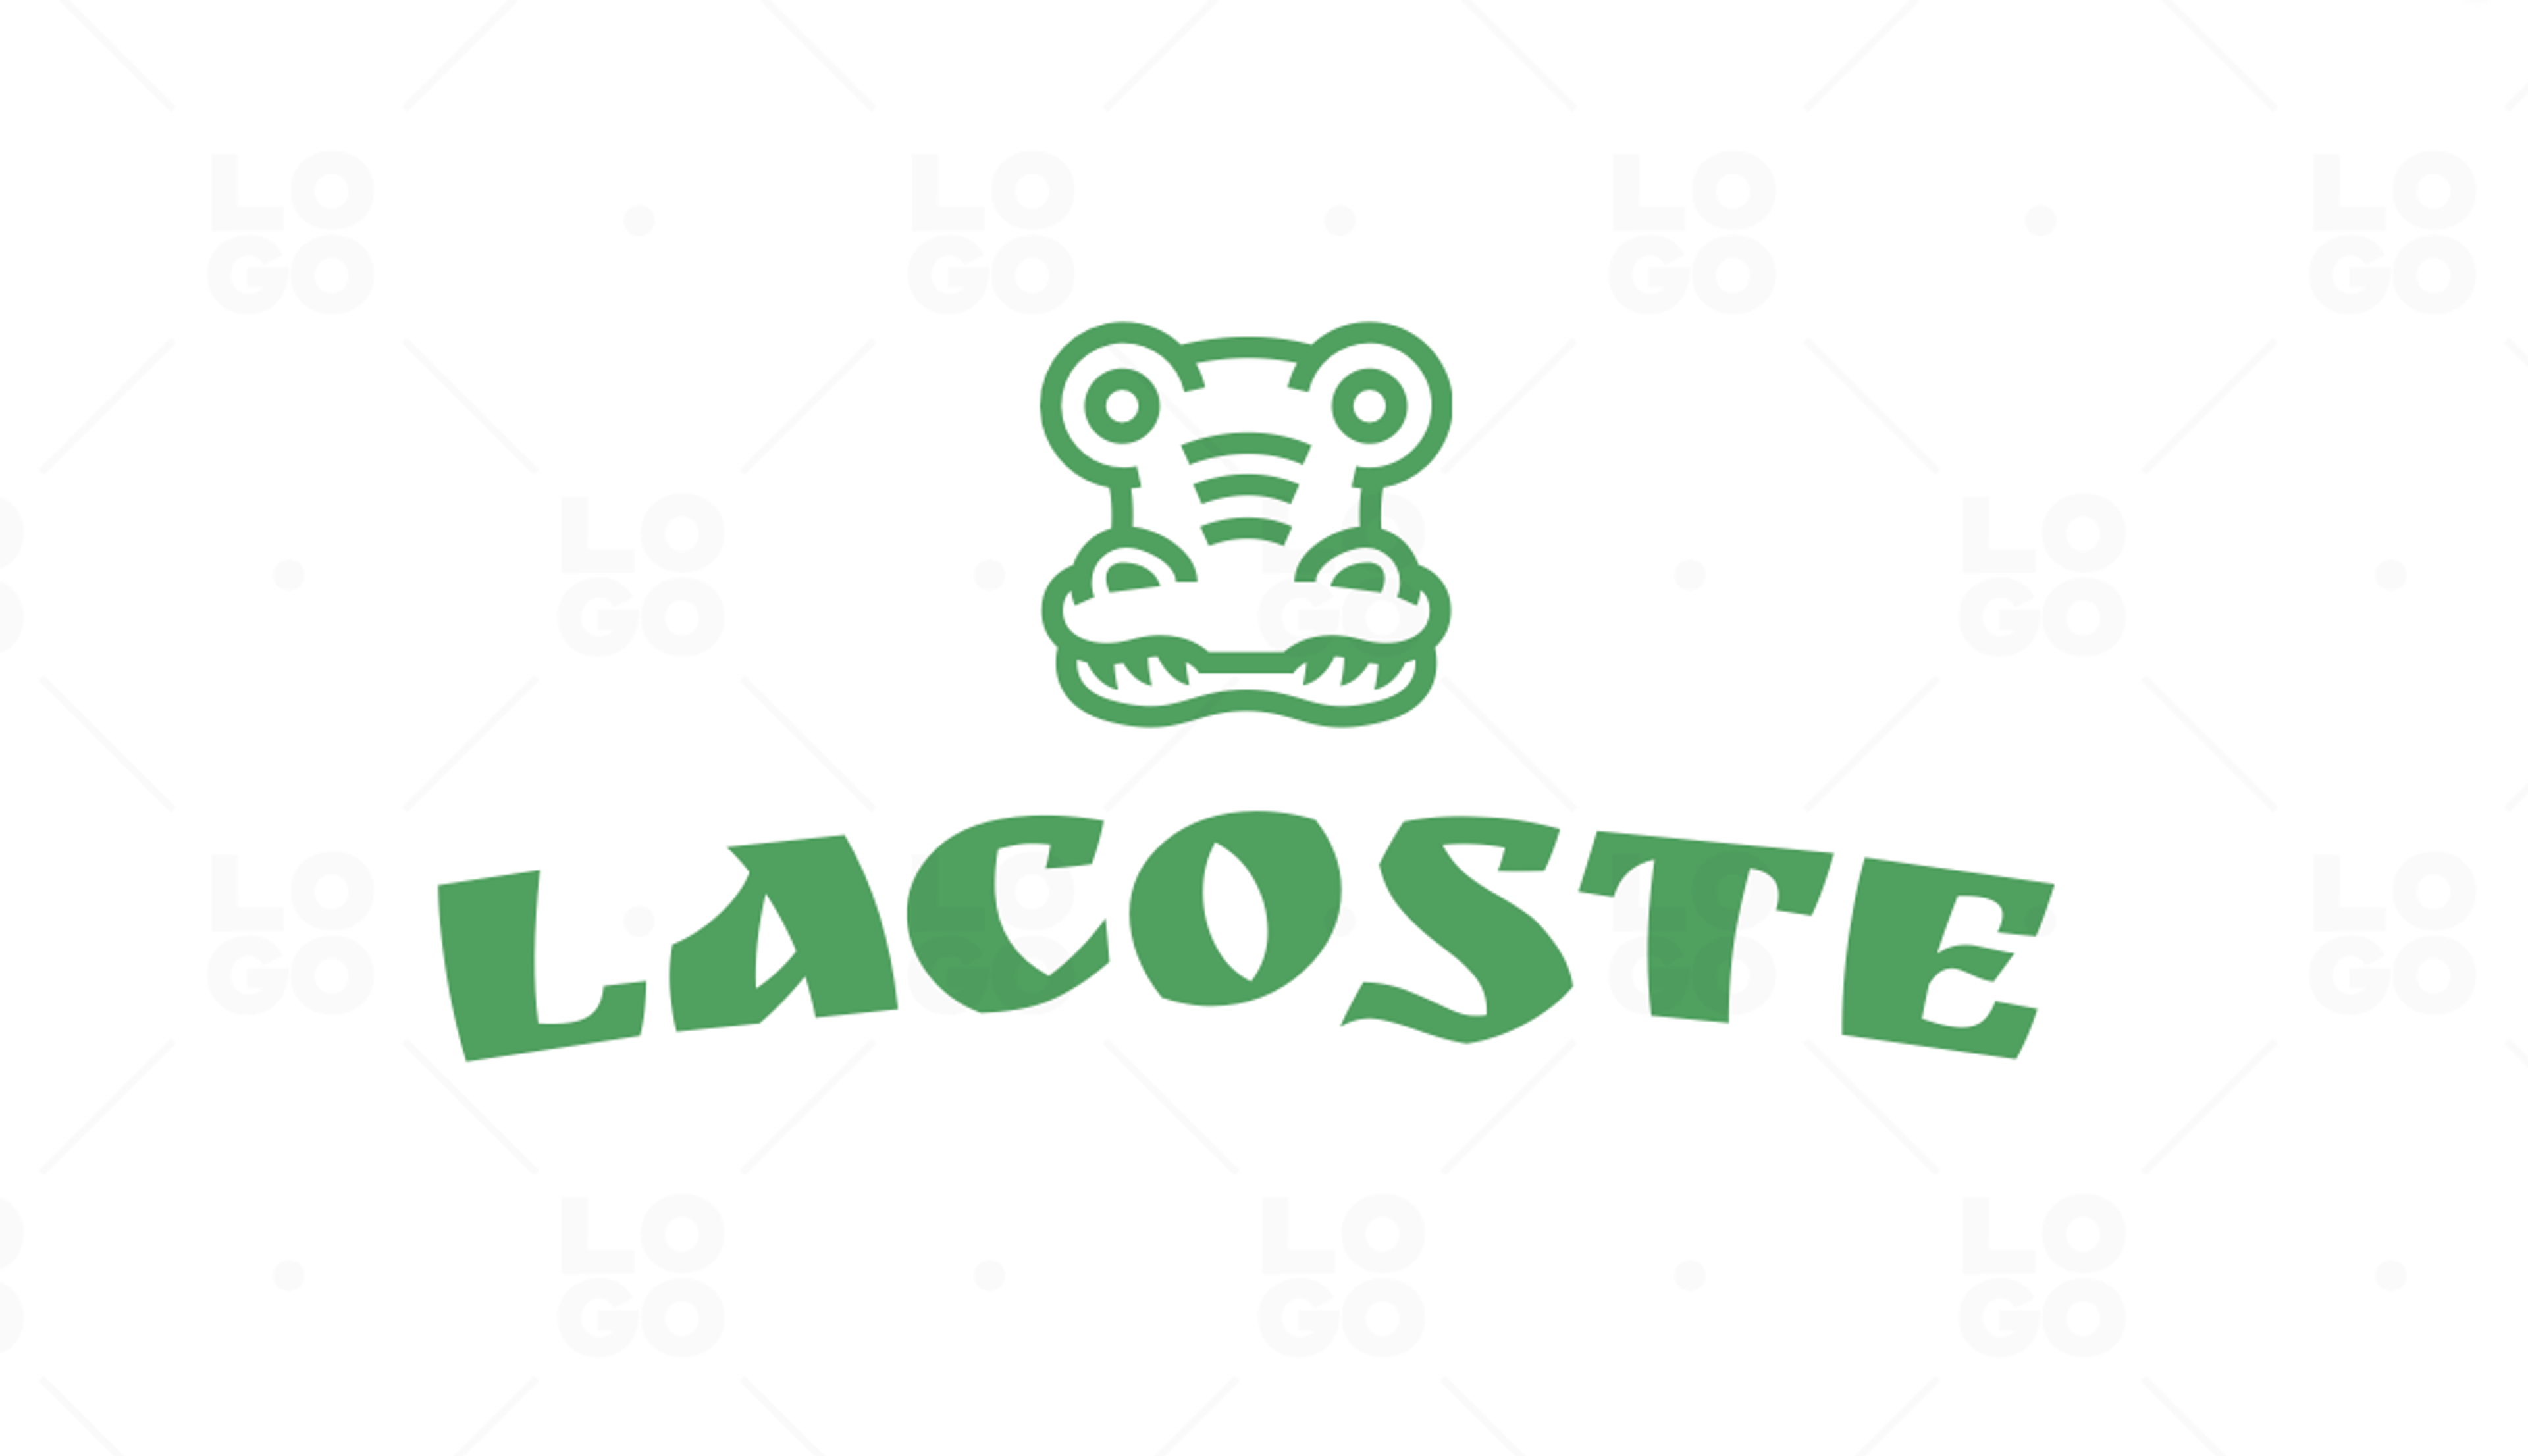 Lacoste logo variation